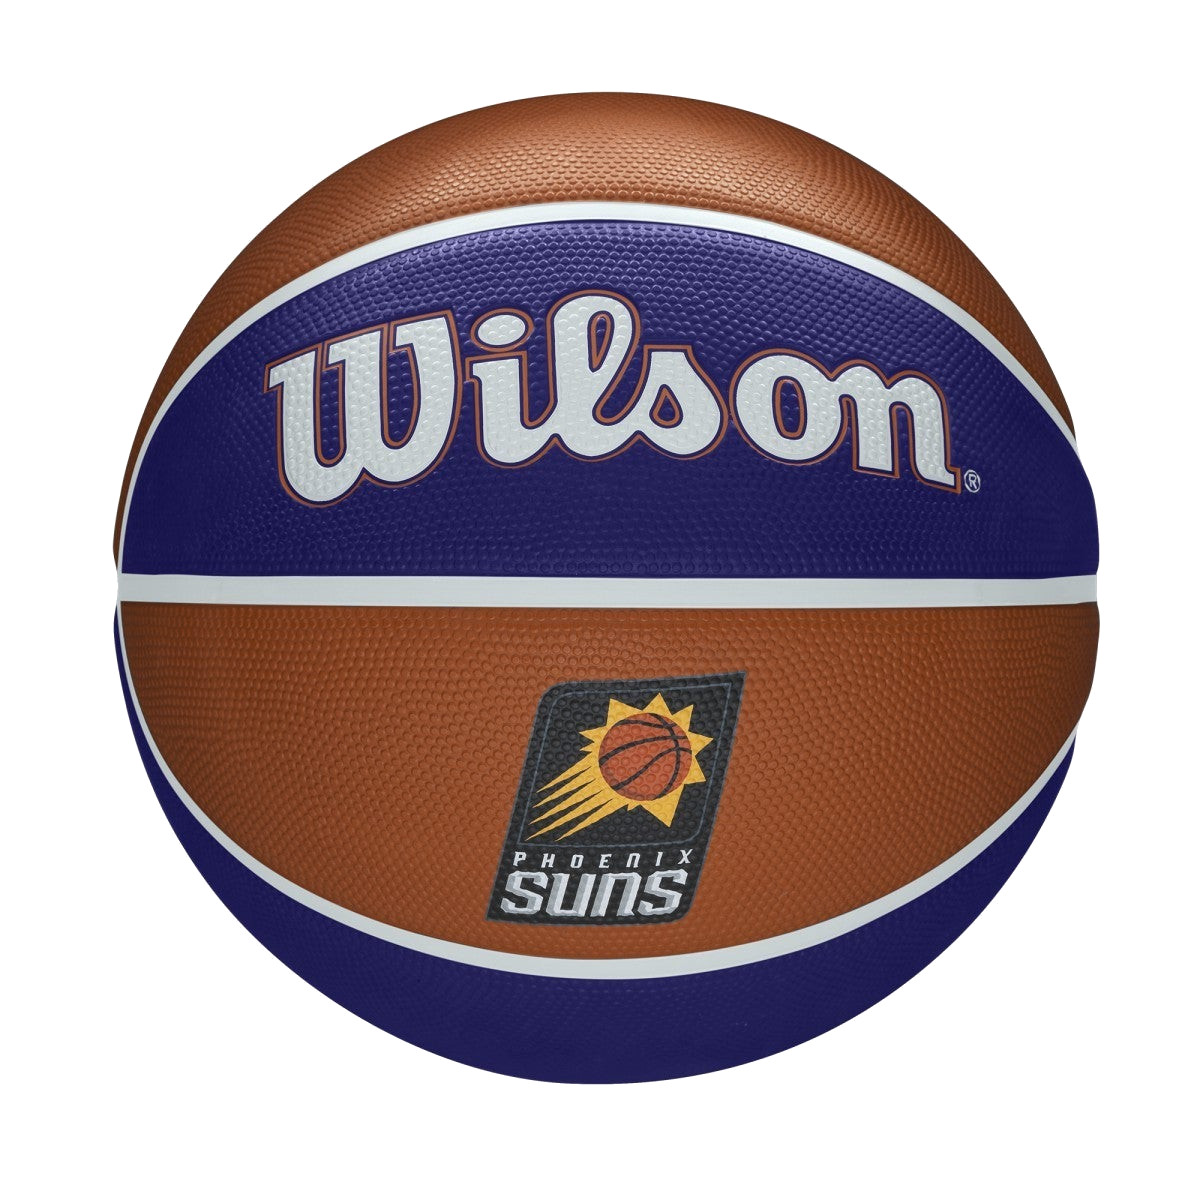 Wilson NBA Basketball Team Tribute Suns Ball (Size 7)